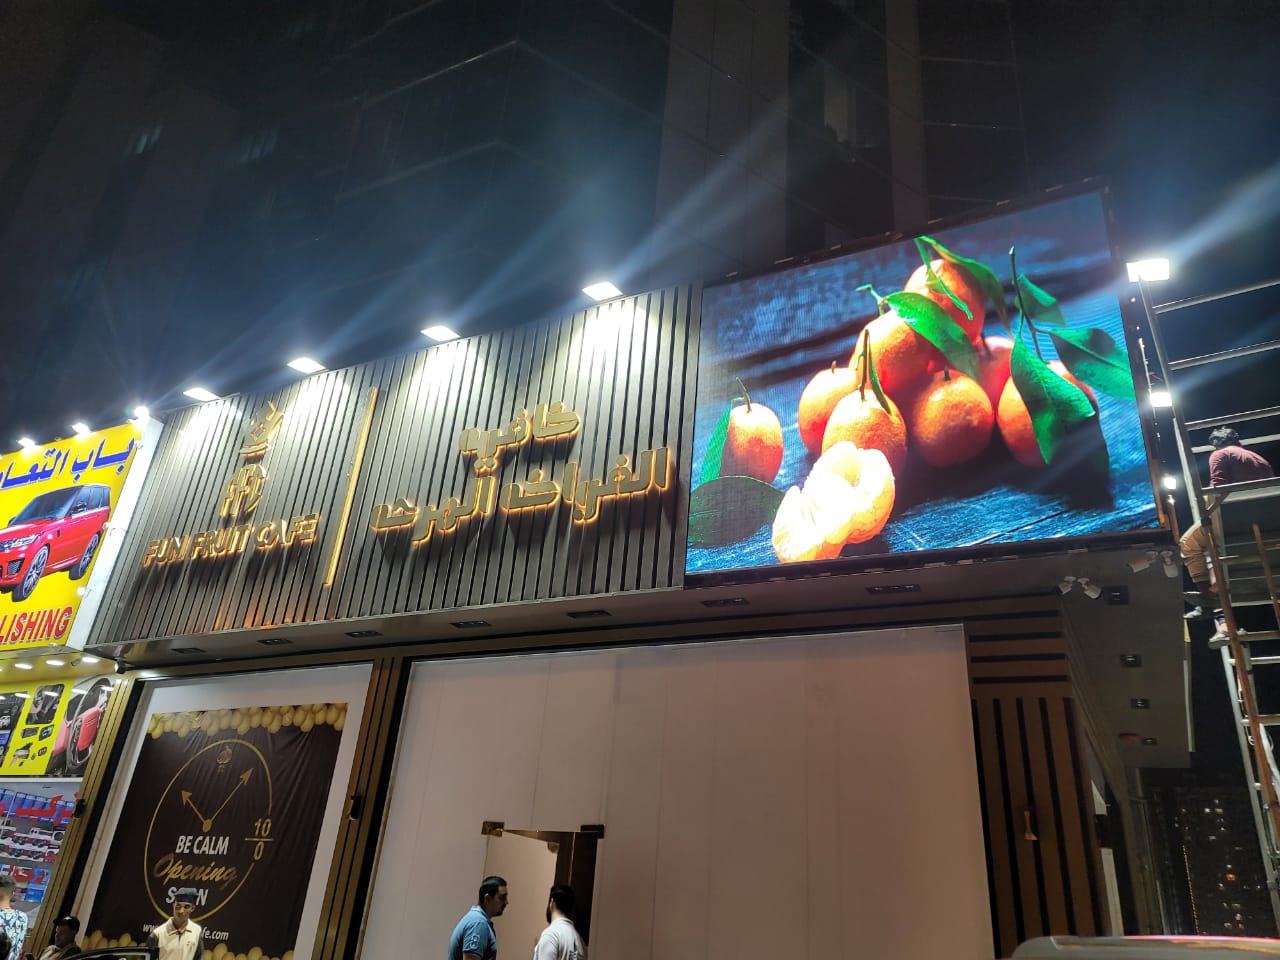 novastar_vx4s_in_dubai<br />
Digital_screen_Dubai<br />
advertising_led_screen<br />
